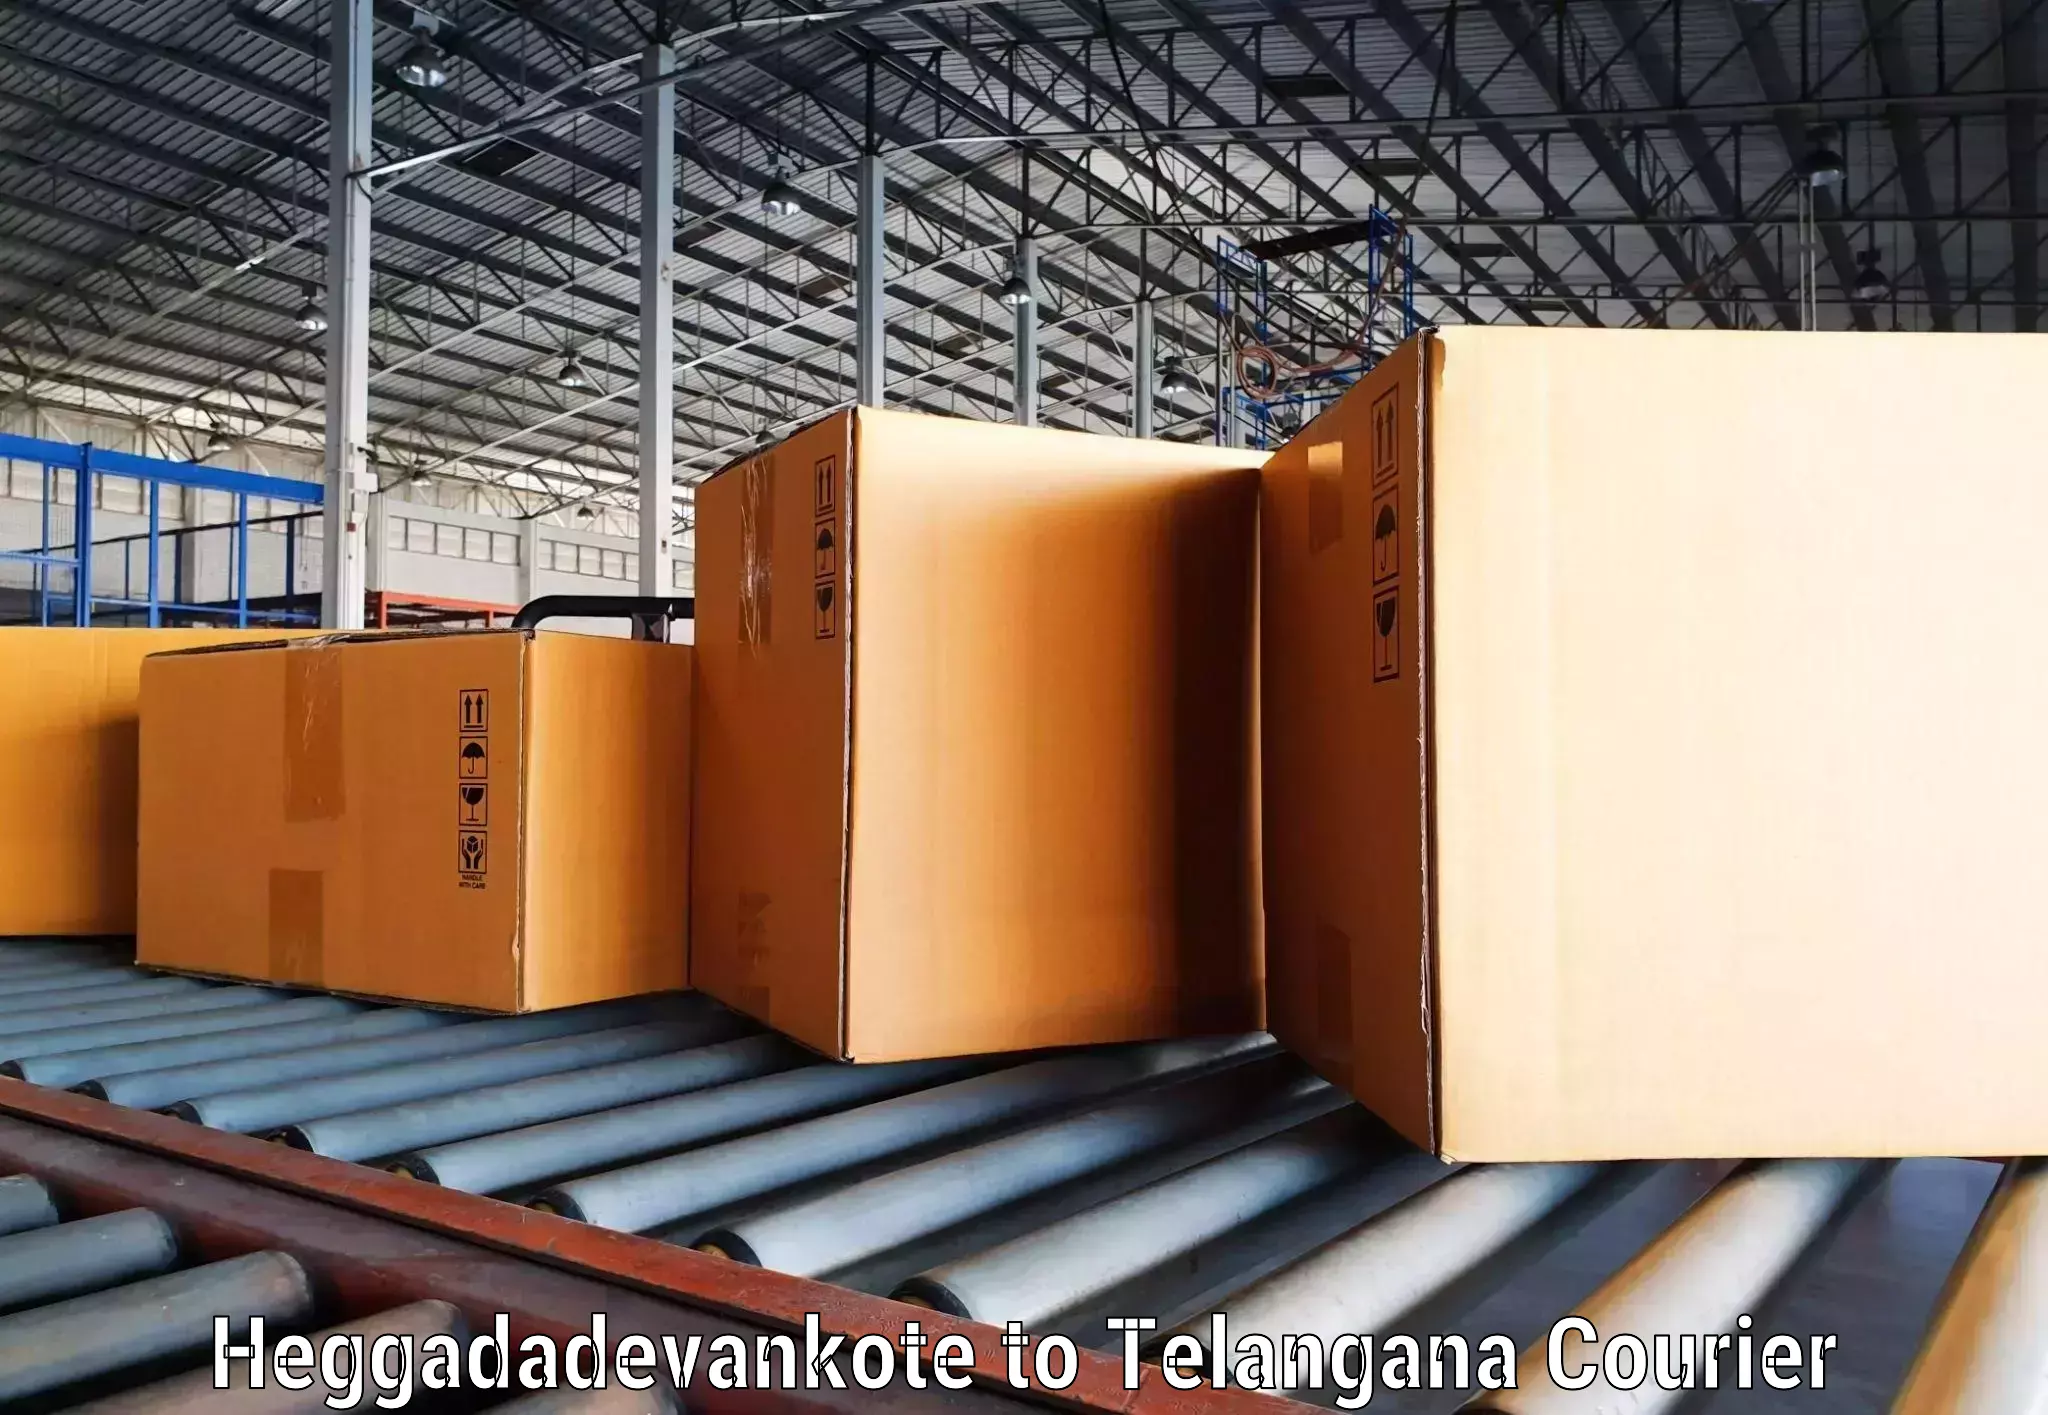 Tech-enabled shipping Heggadadevankote to Vemulawada